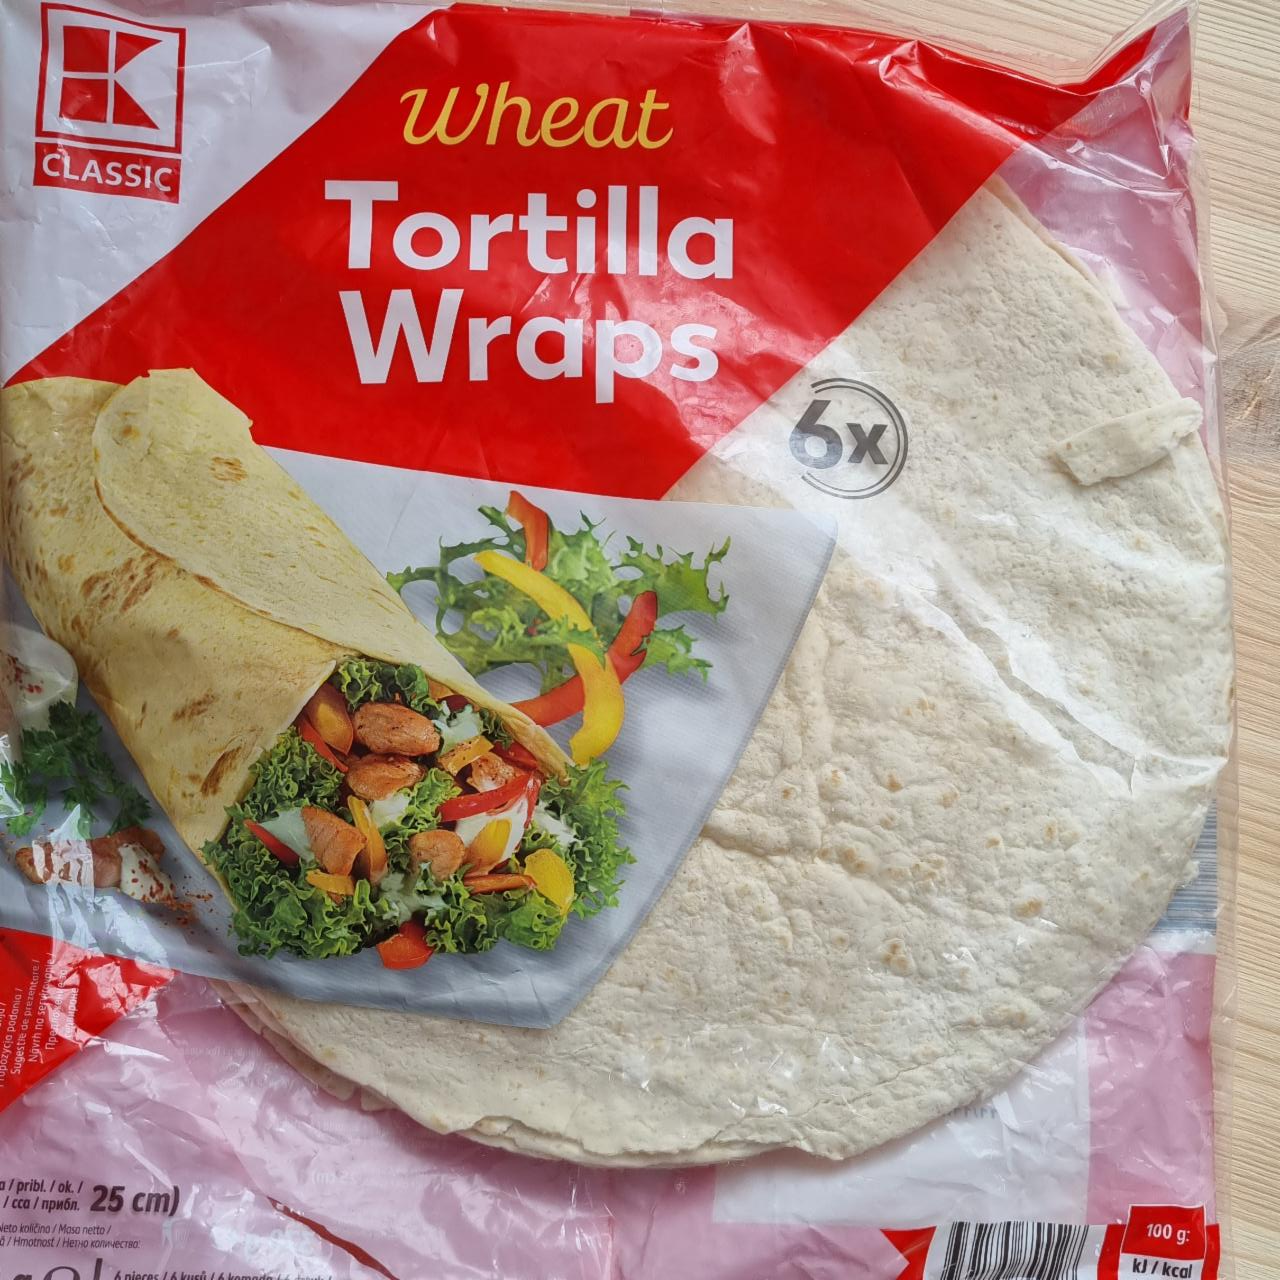 Képek - Wheat tortilla wraps K-Classic